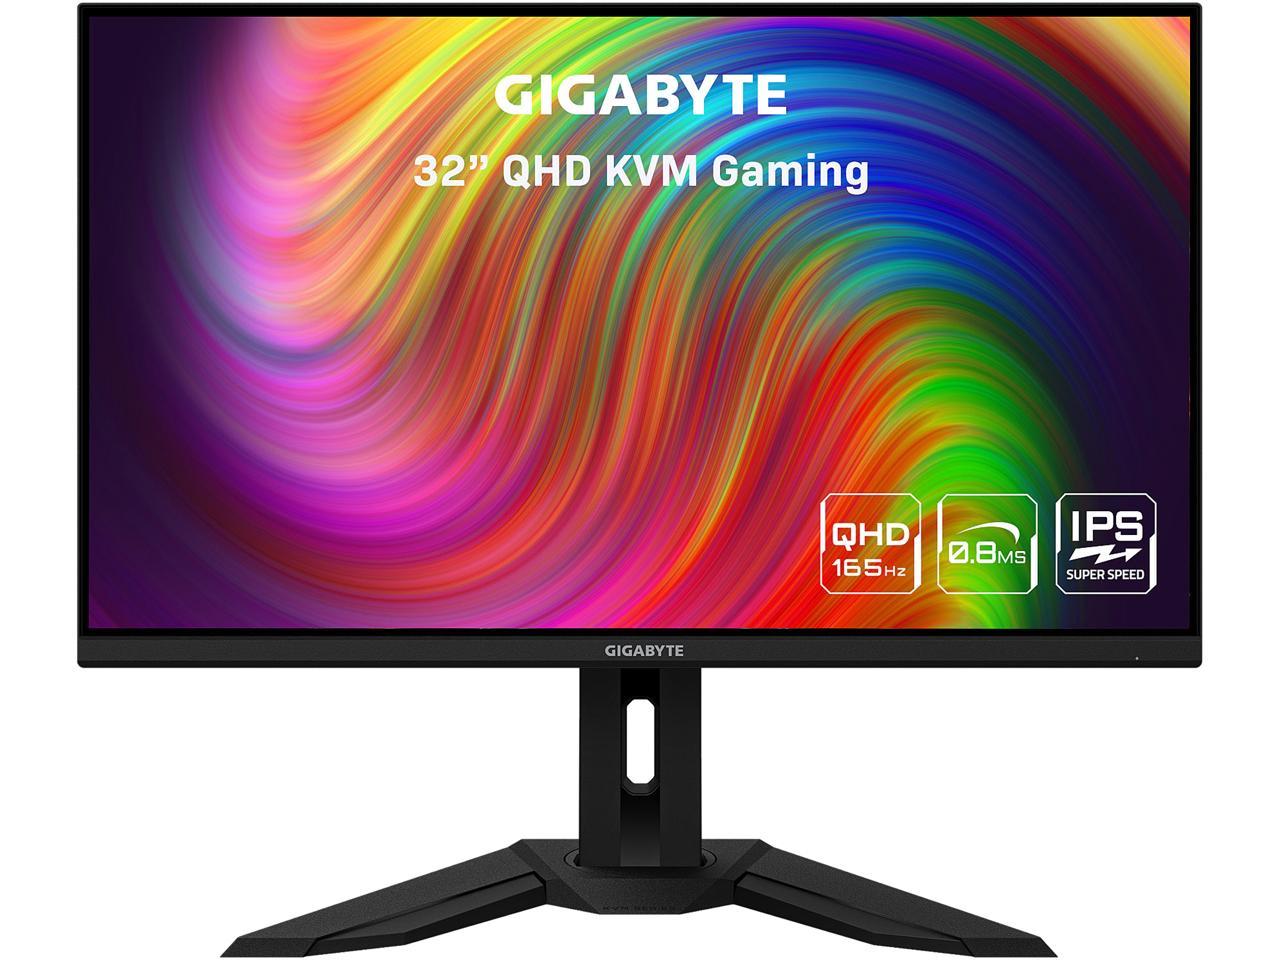 GIGABYTE M32Q 32" Gaming Monitor $280